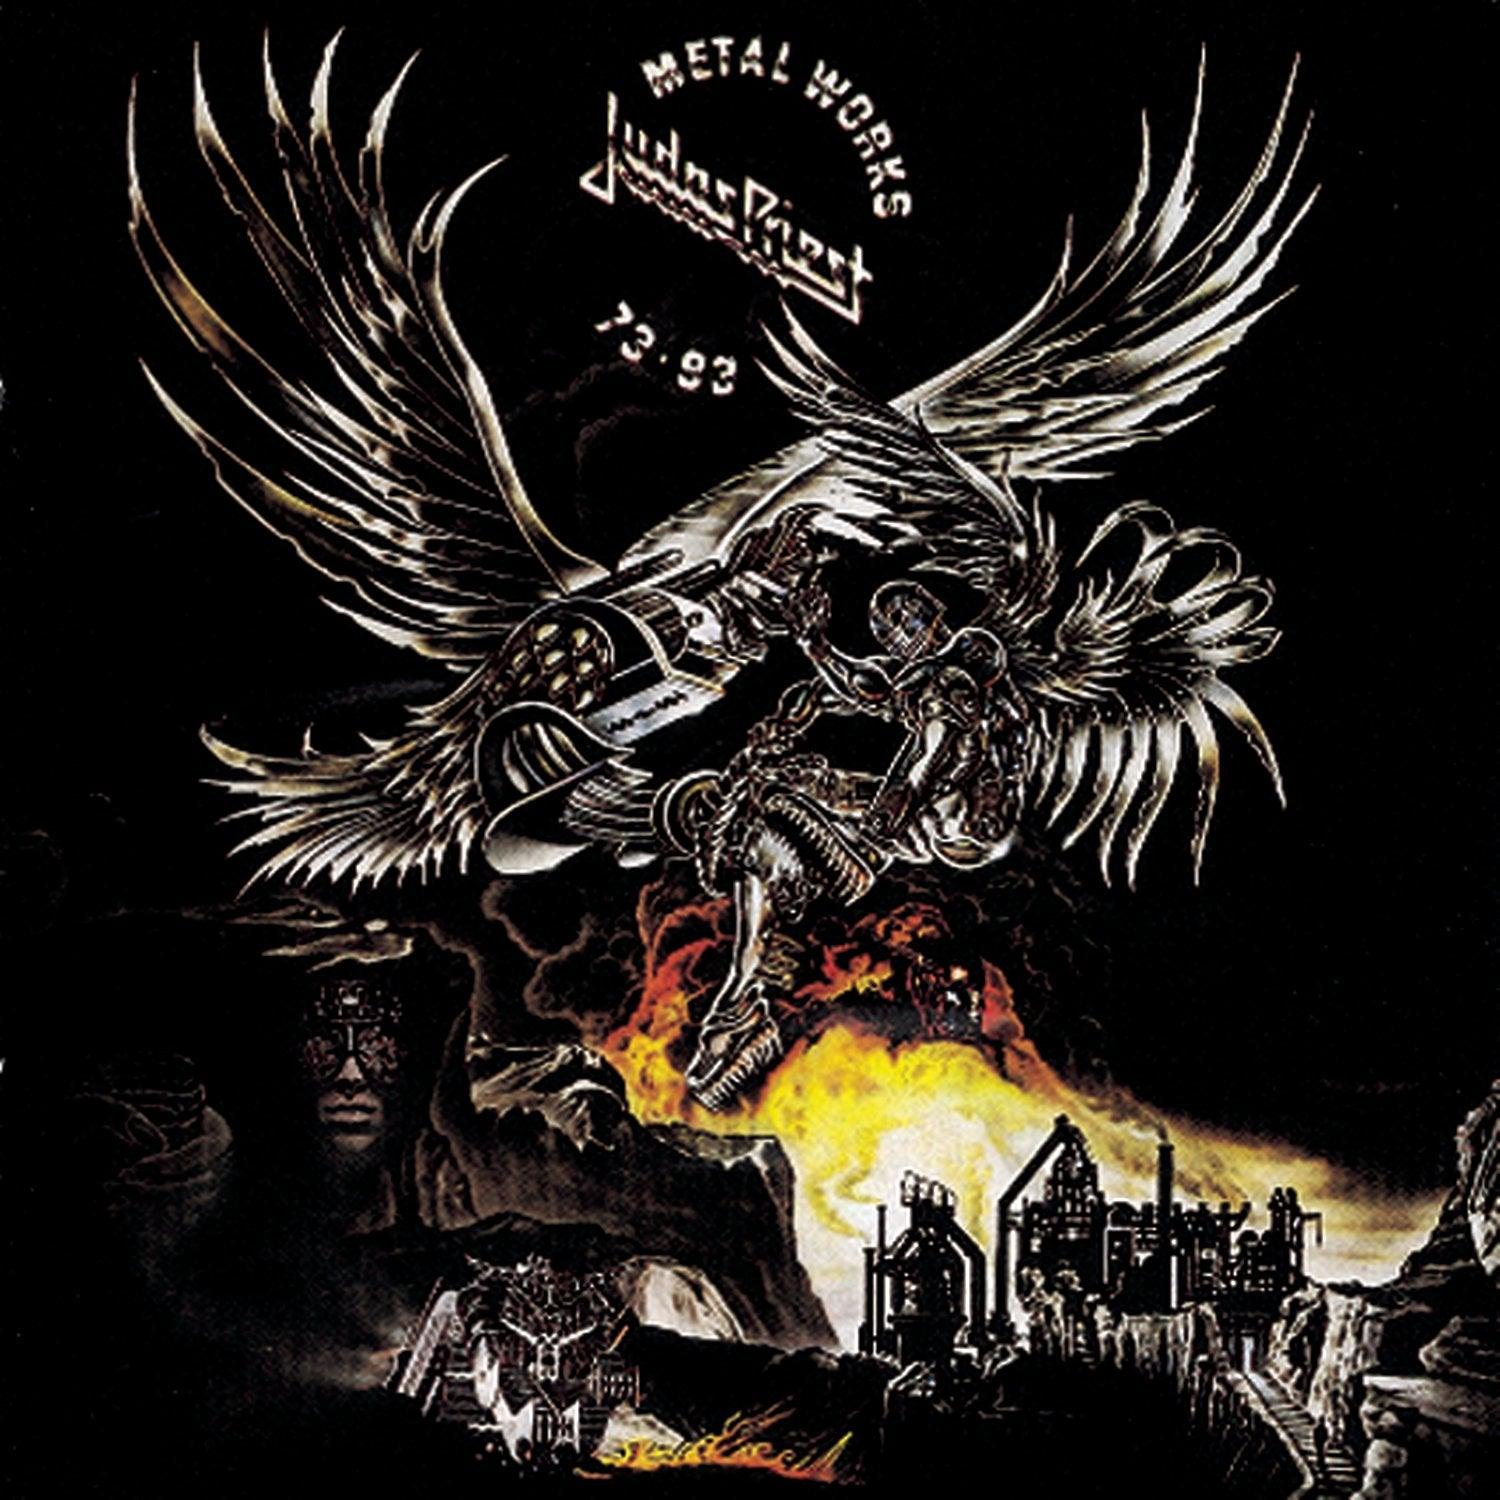 Judas Priest- Metal Works '73-'93 - DarksideRecords